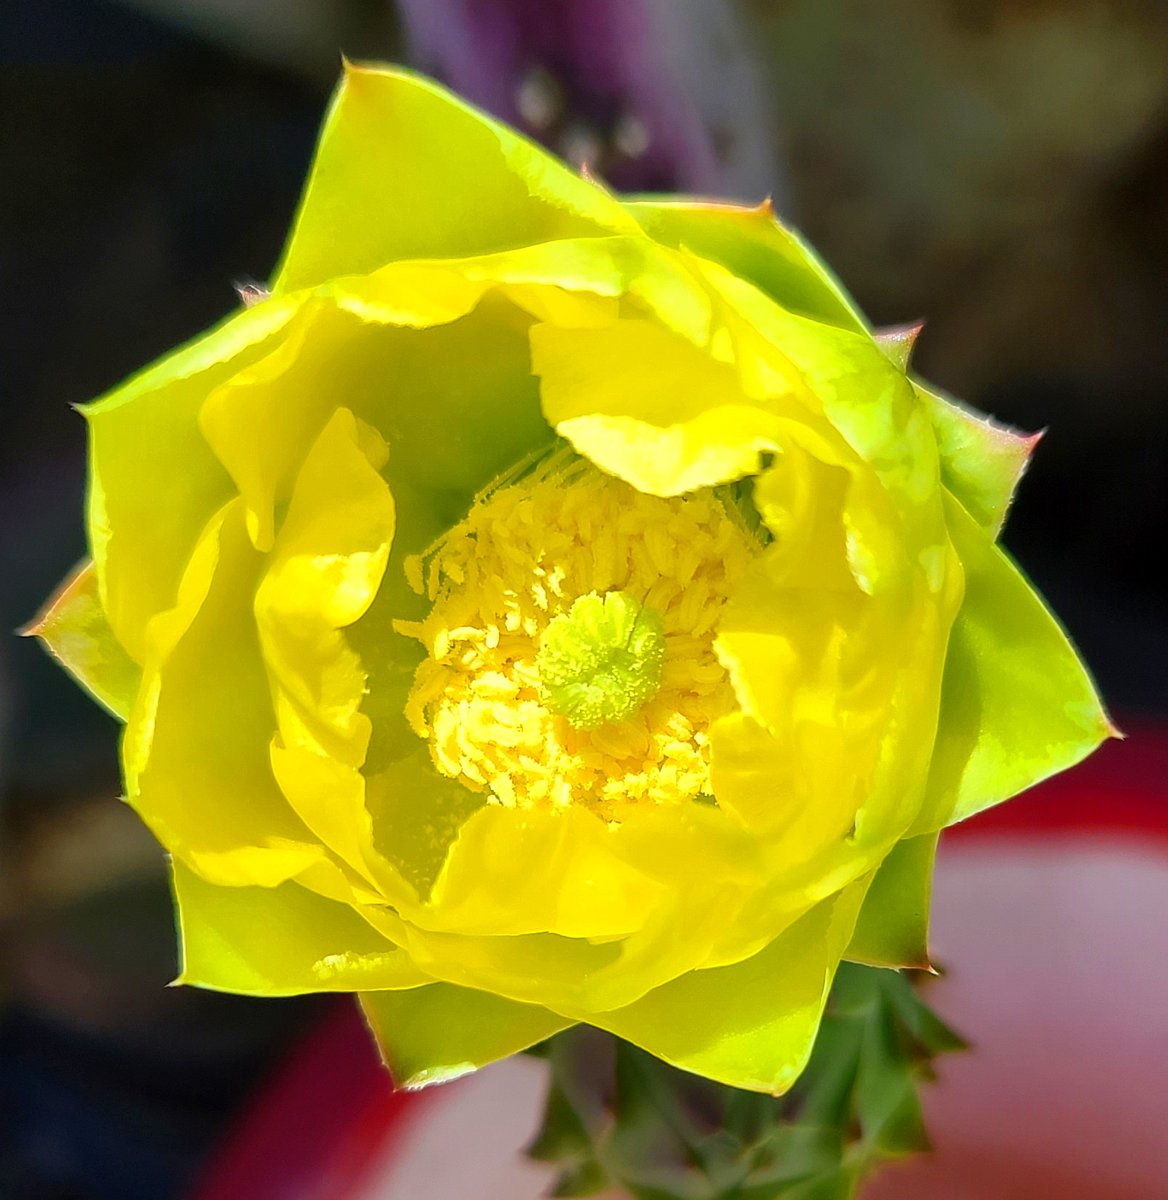 That time of year the Sonoran Desert shines with the beauty of cactus flowers #Desert #Cactus #sonorandesert #flowerphotography #Flowers #cactusflowers #Tucson #Arizona #enjoynature #GardeningX  #ExploreWest #arizonadesert #southwestusa #desertliving #exploreaz #pricklypearcactus